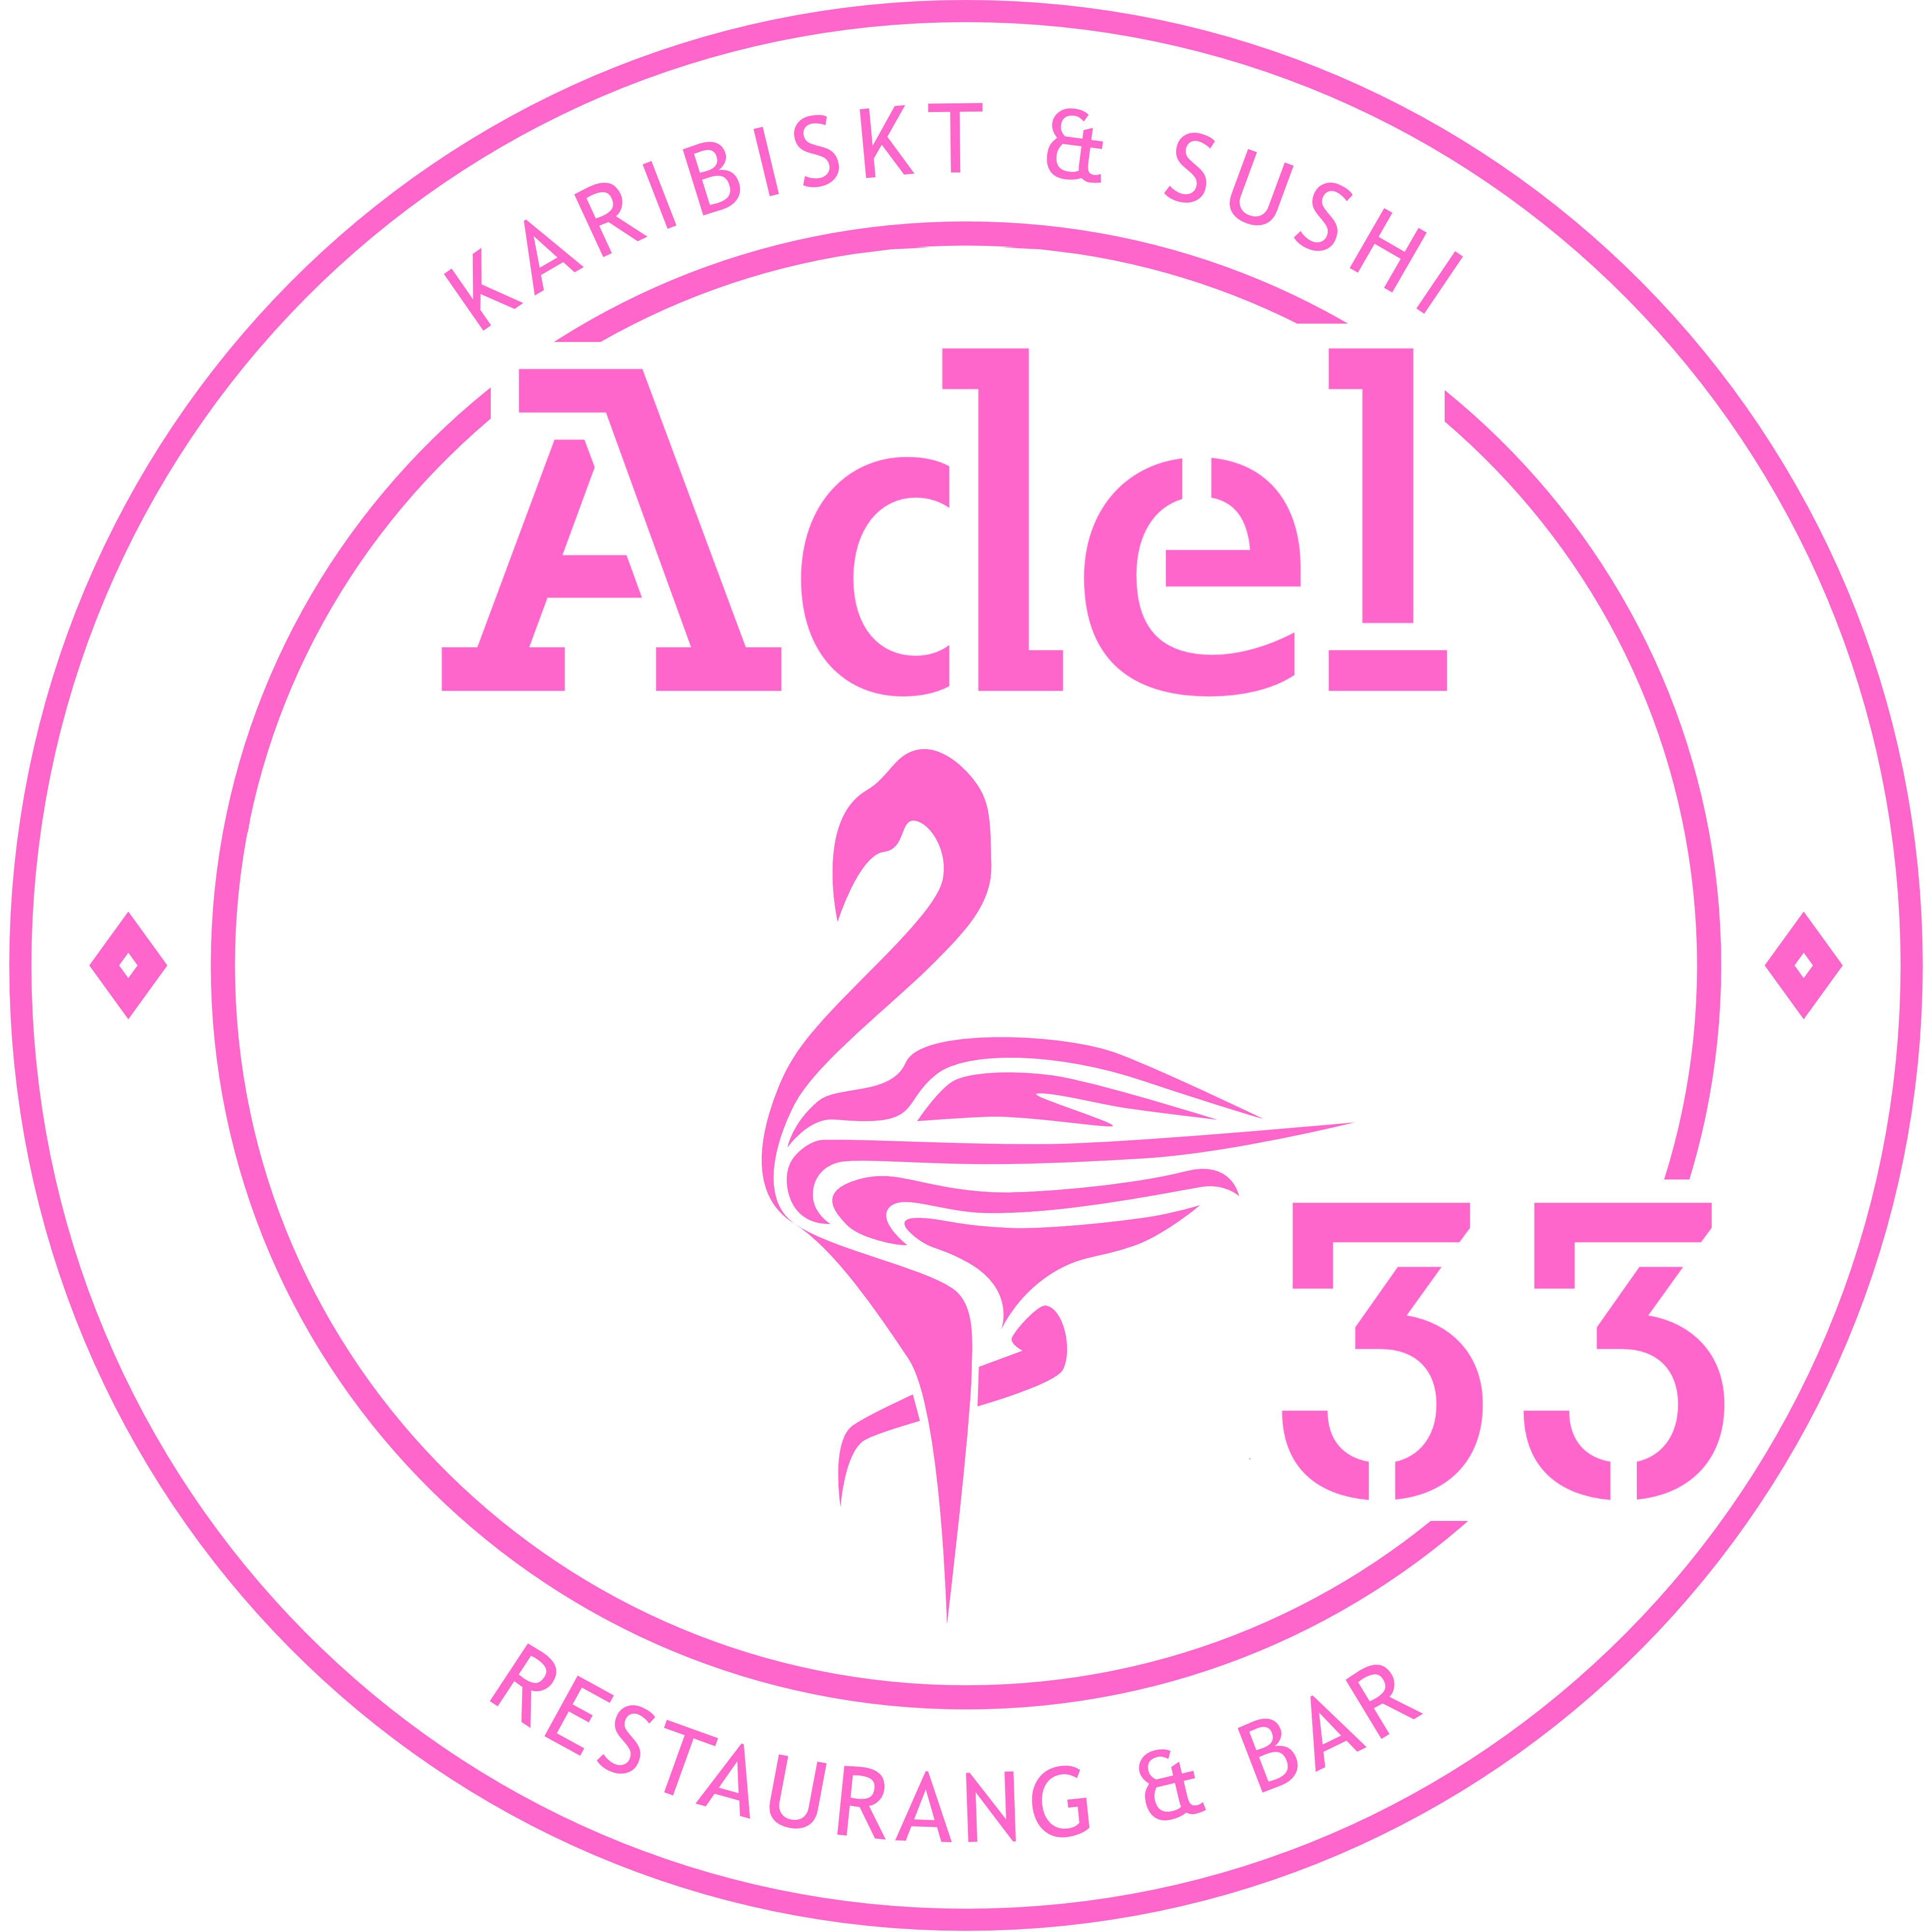 Adel 33